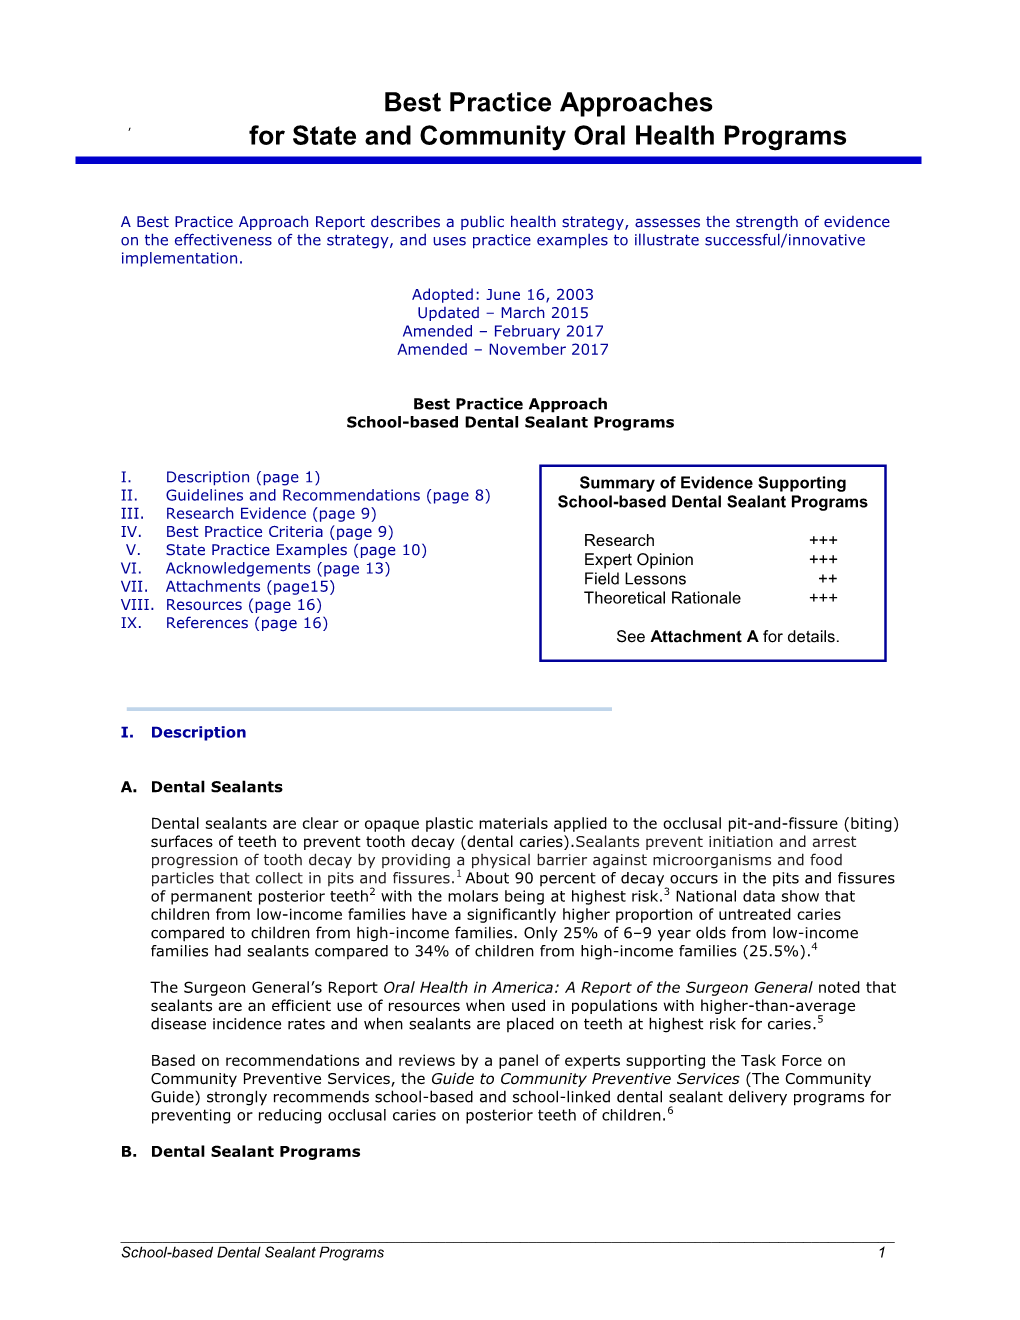 School-Based Dental Sealant Programs (PDF)